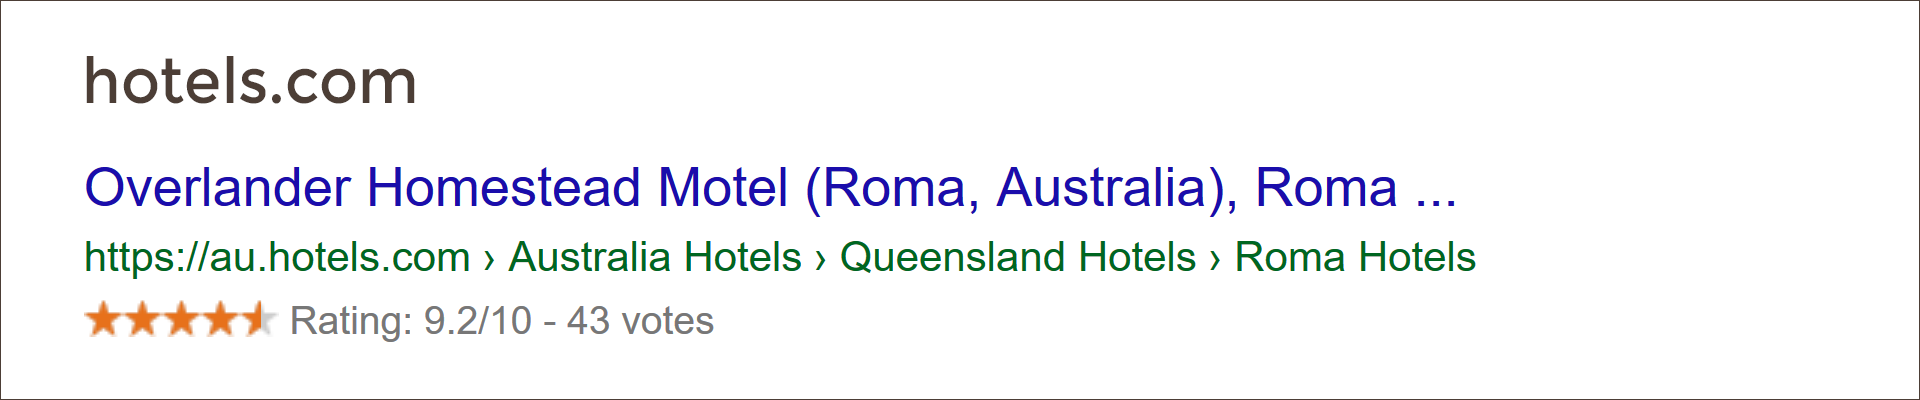 hotels.com Reviews of The Overlander Homestead Motel Roma Queensland